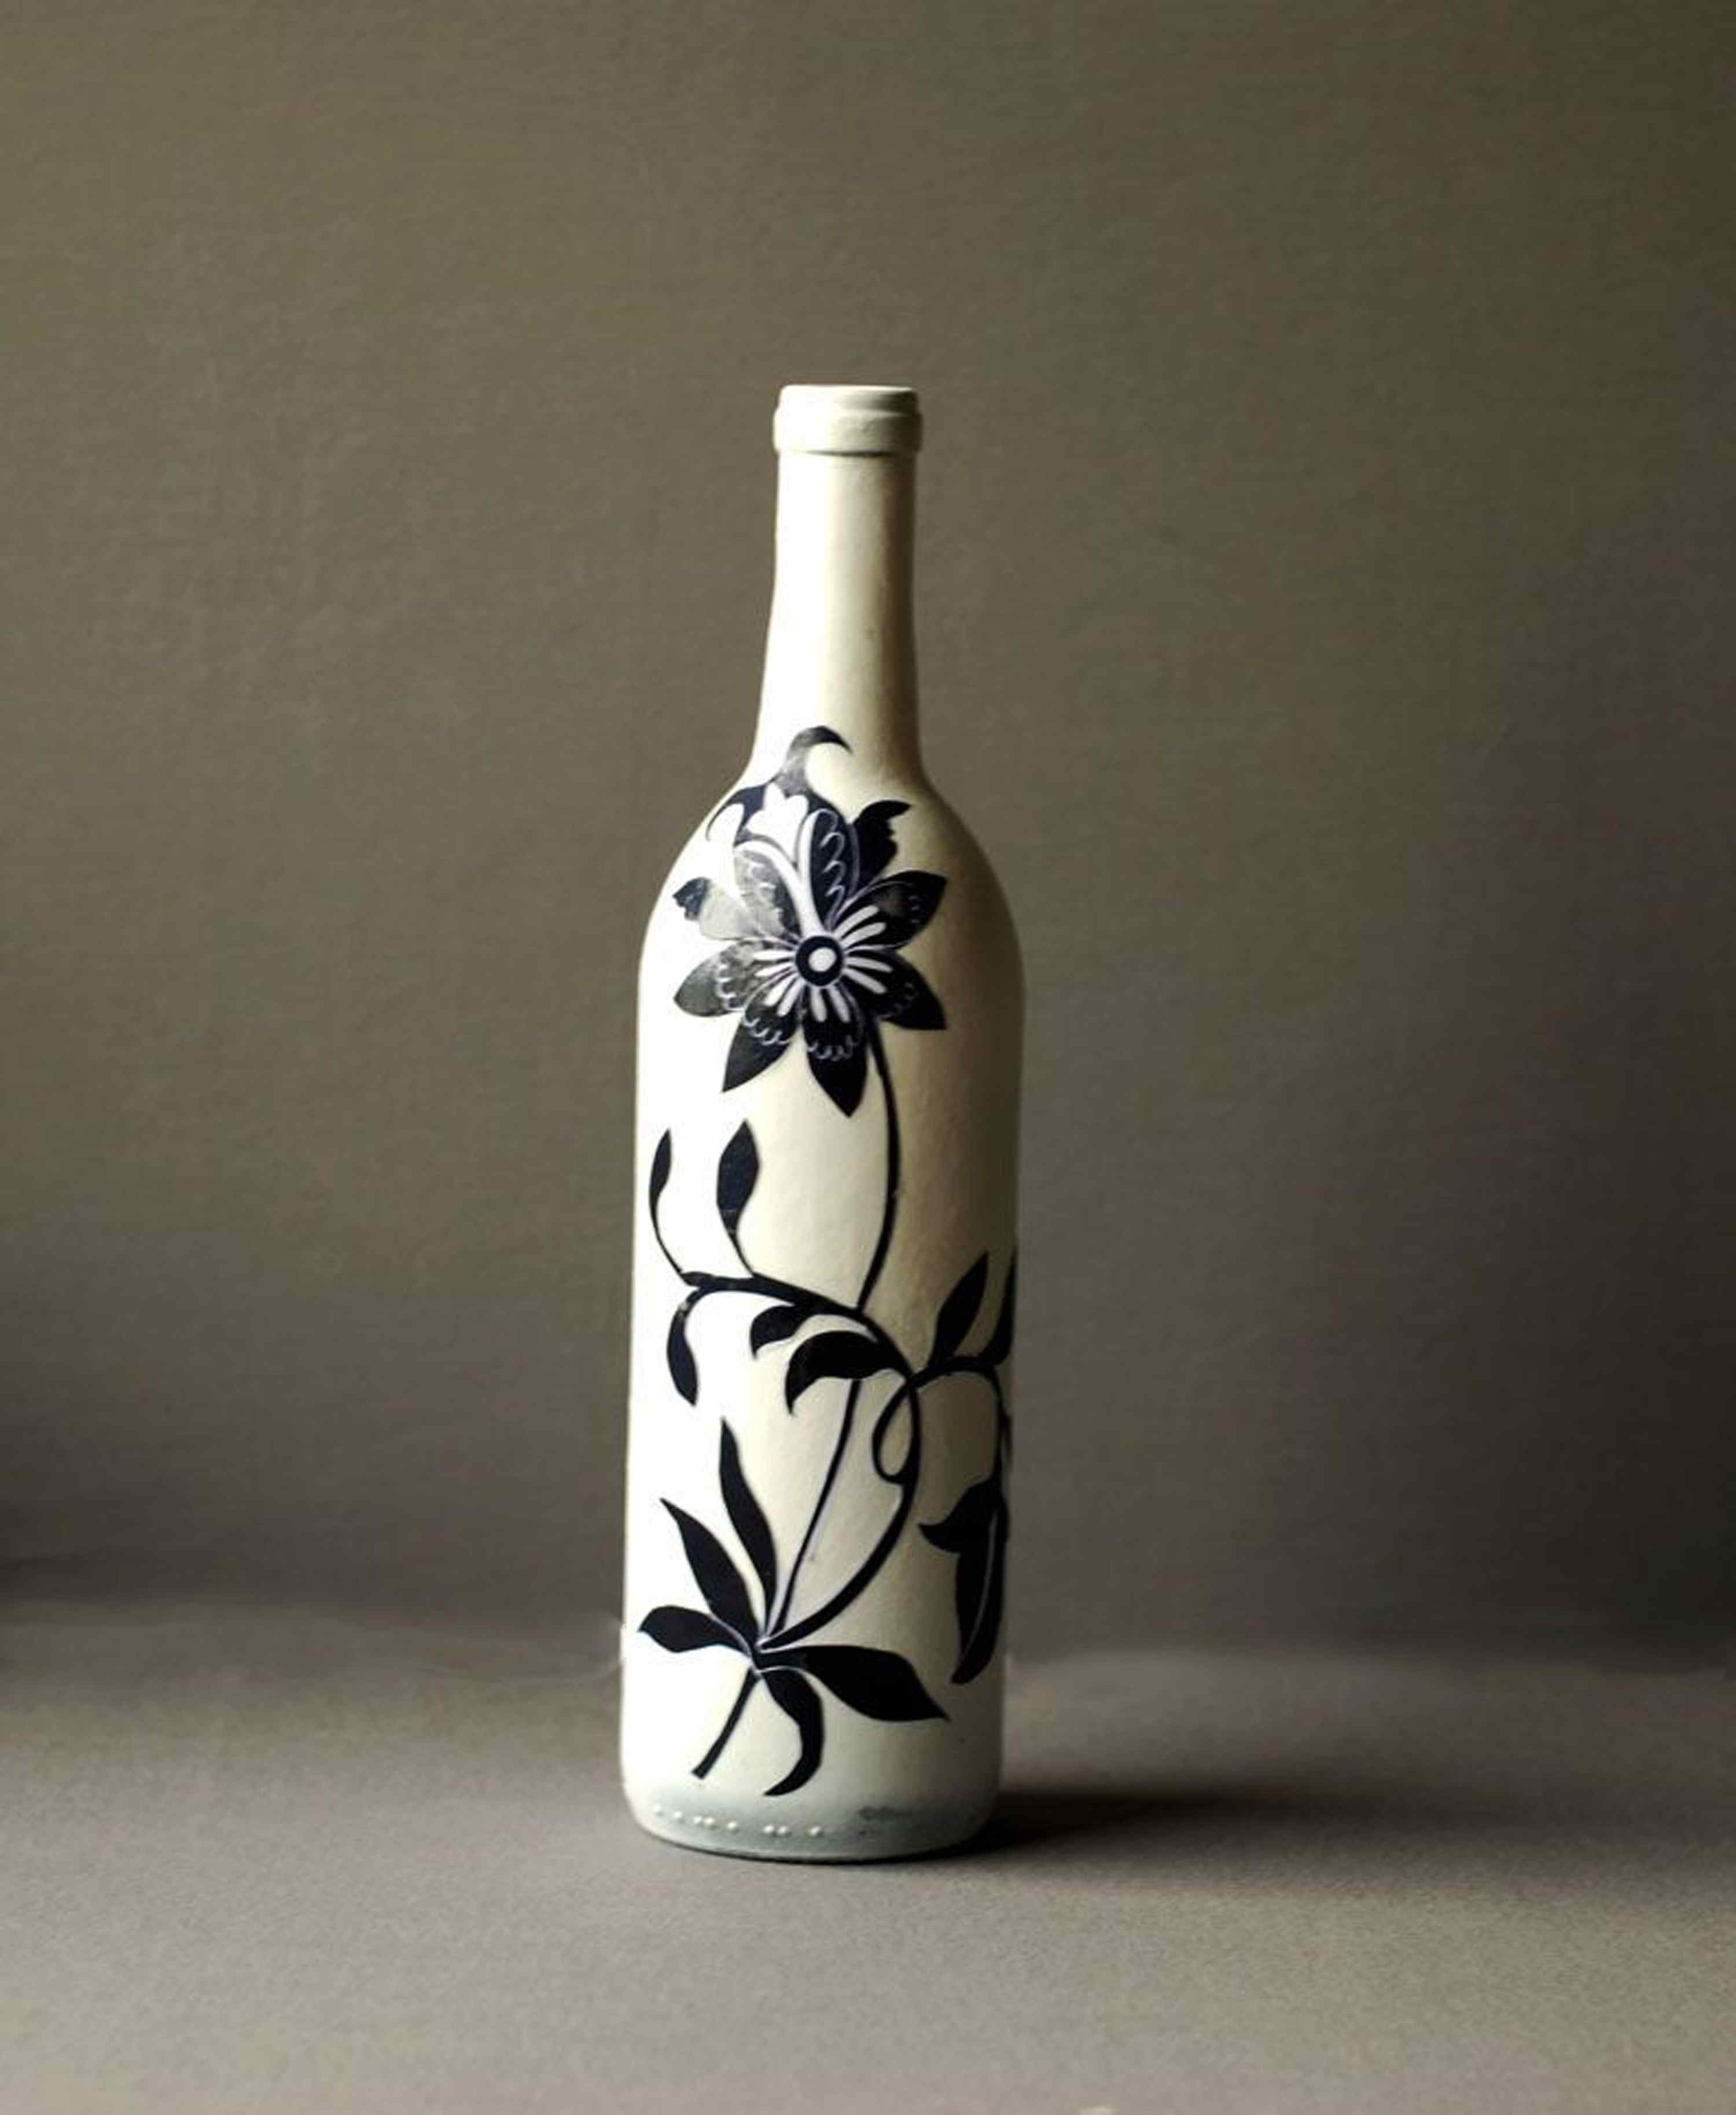 spray paint glass vases white of asian style recycled decoupage wine bottle craft regarding decoupaged wine bottle 58bcb5685f9b58af5cc40cbb